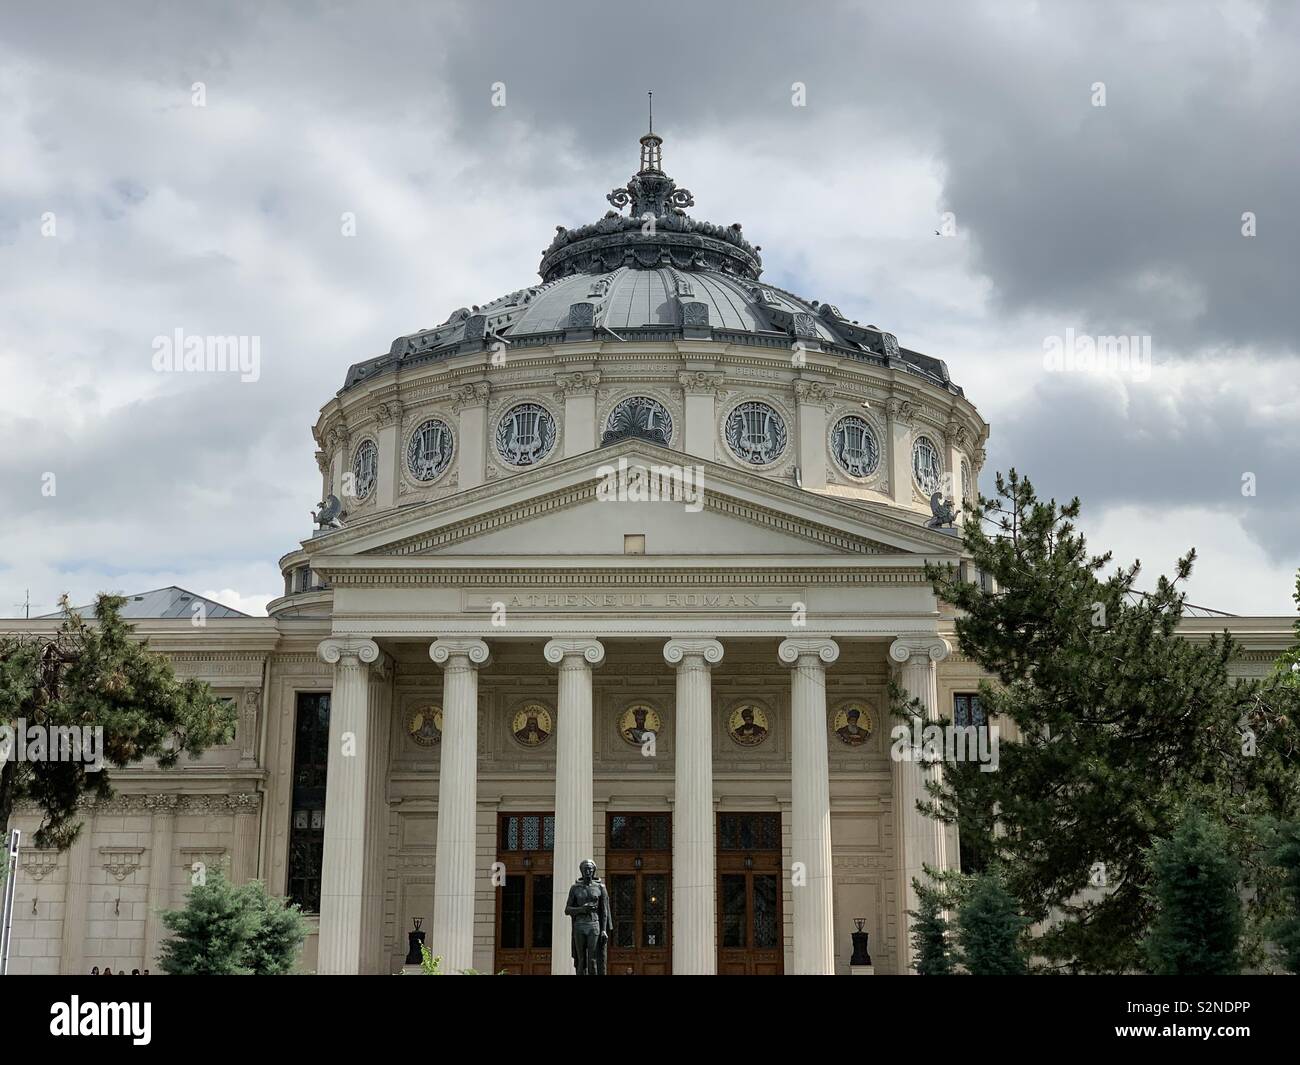 The Romanian Athenaeum building, Touristic attraction of Bucharest, Romania Stock Photo